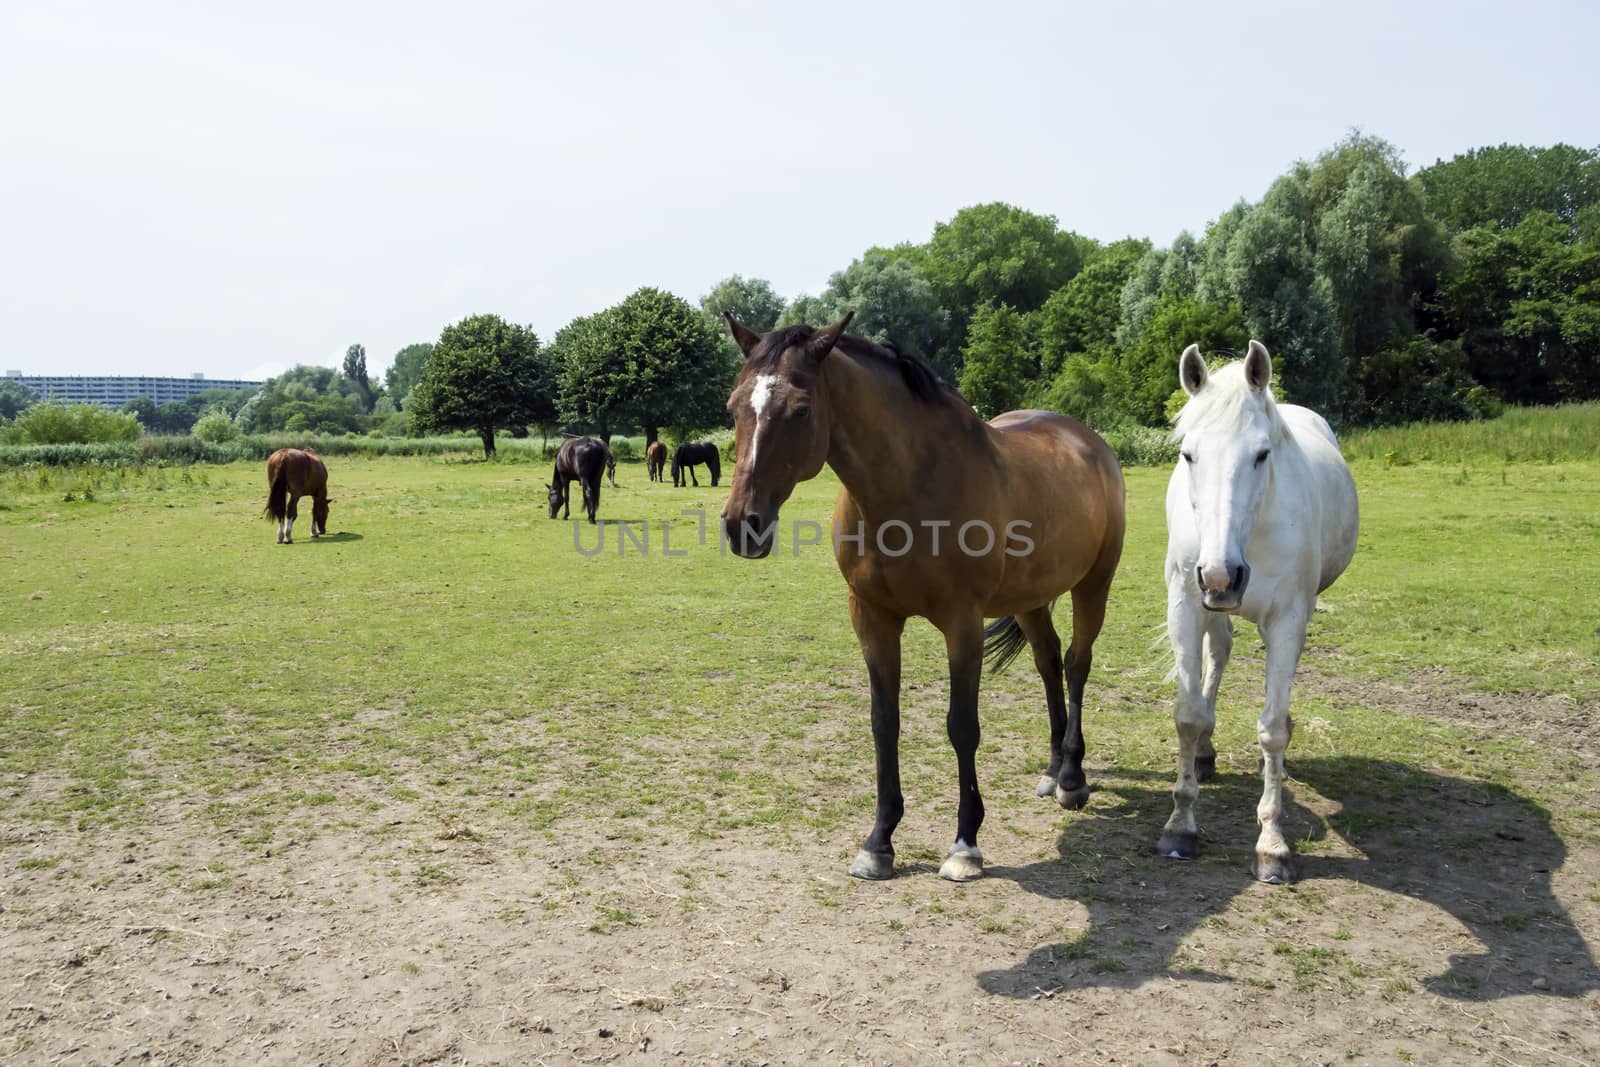 herd of horses by Tetyana